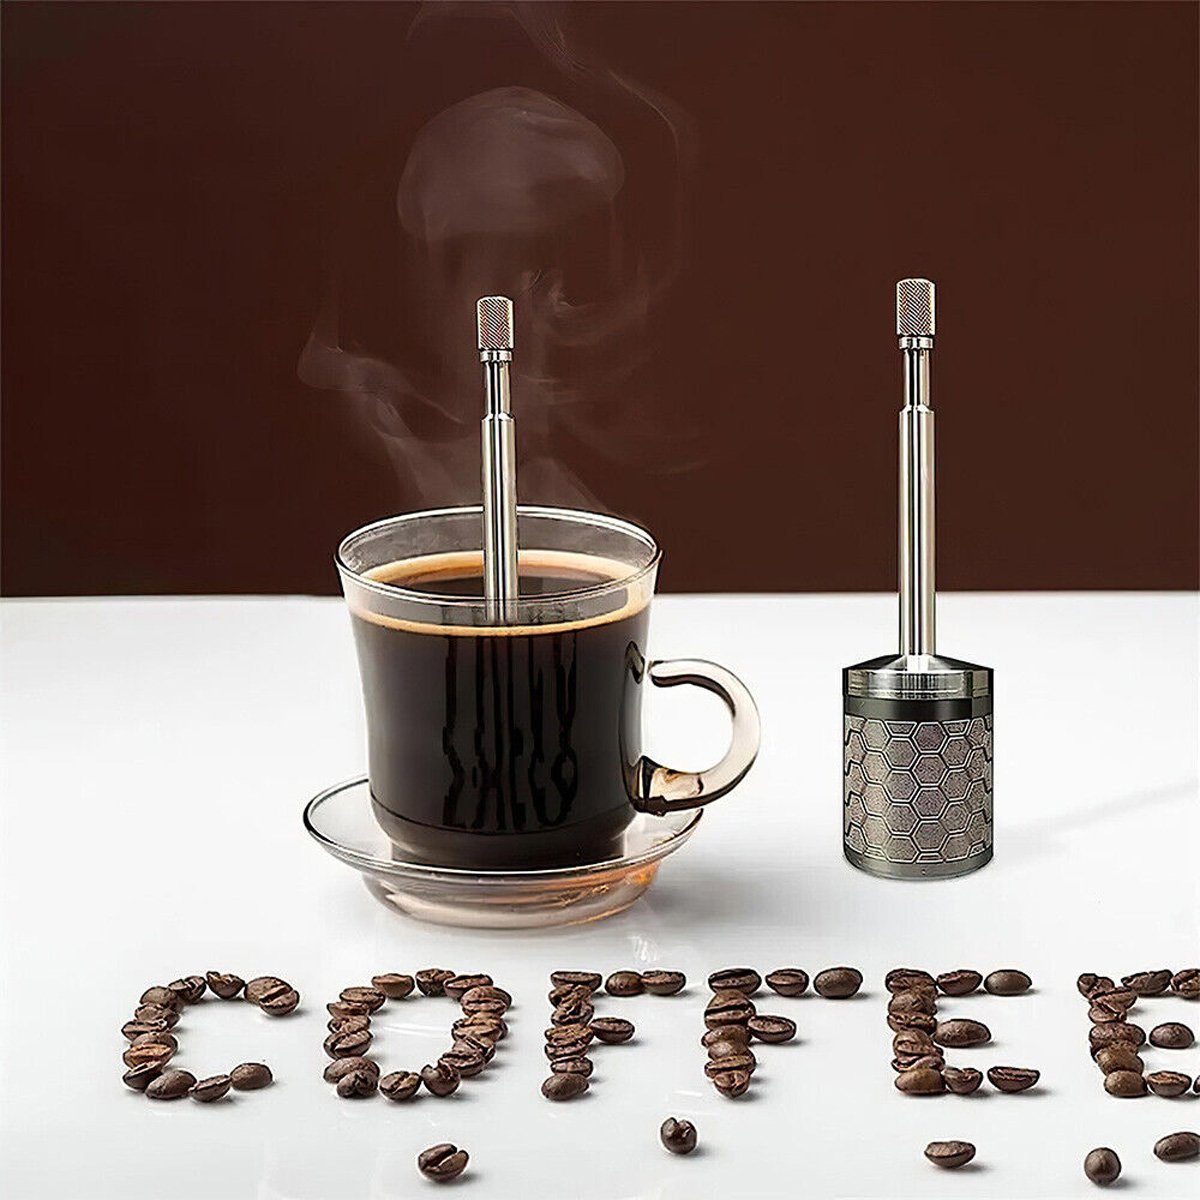 yozhiqu Handfilter Push-Kaffeefilter aus Edelstahl, Moderner und einfacher Push-Kaffeefilter aus Edelstahl 304